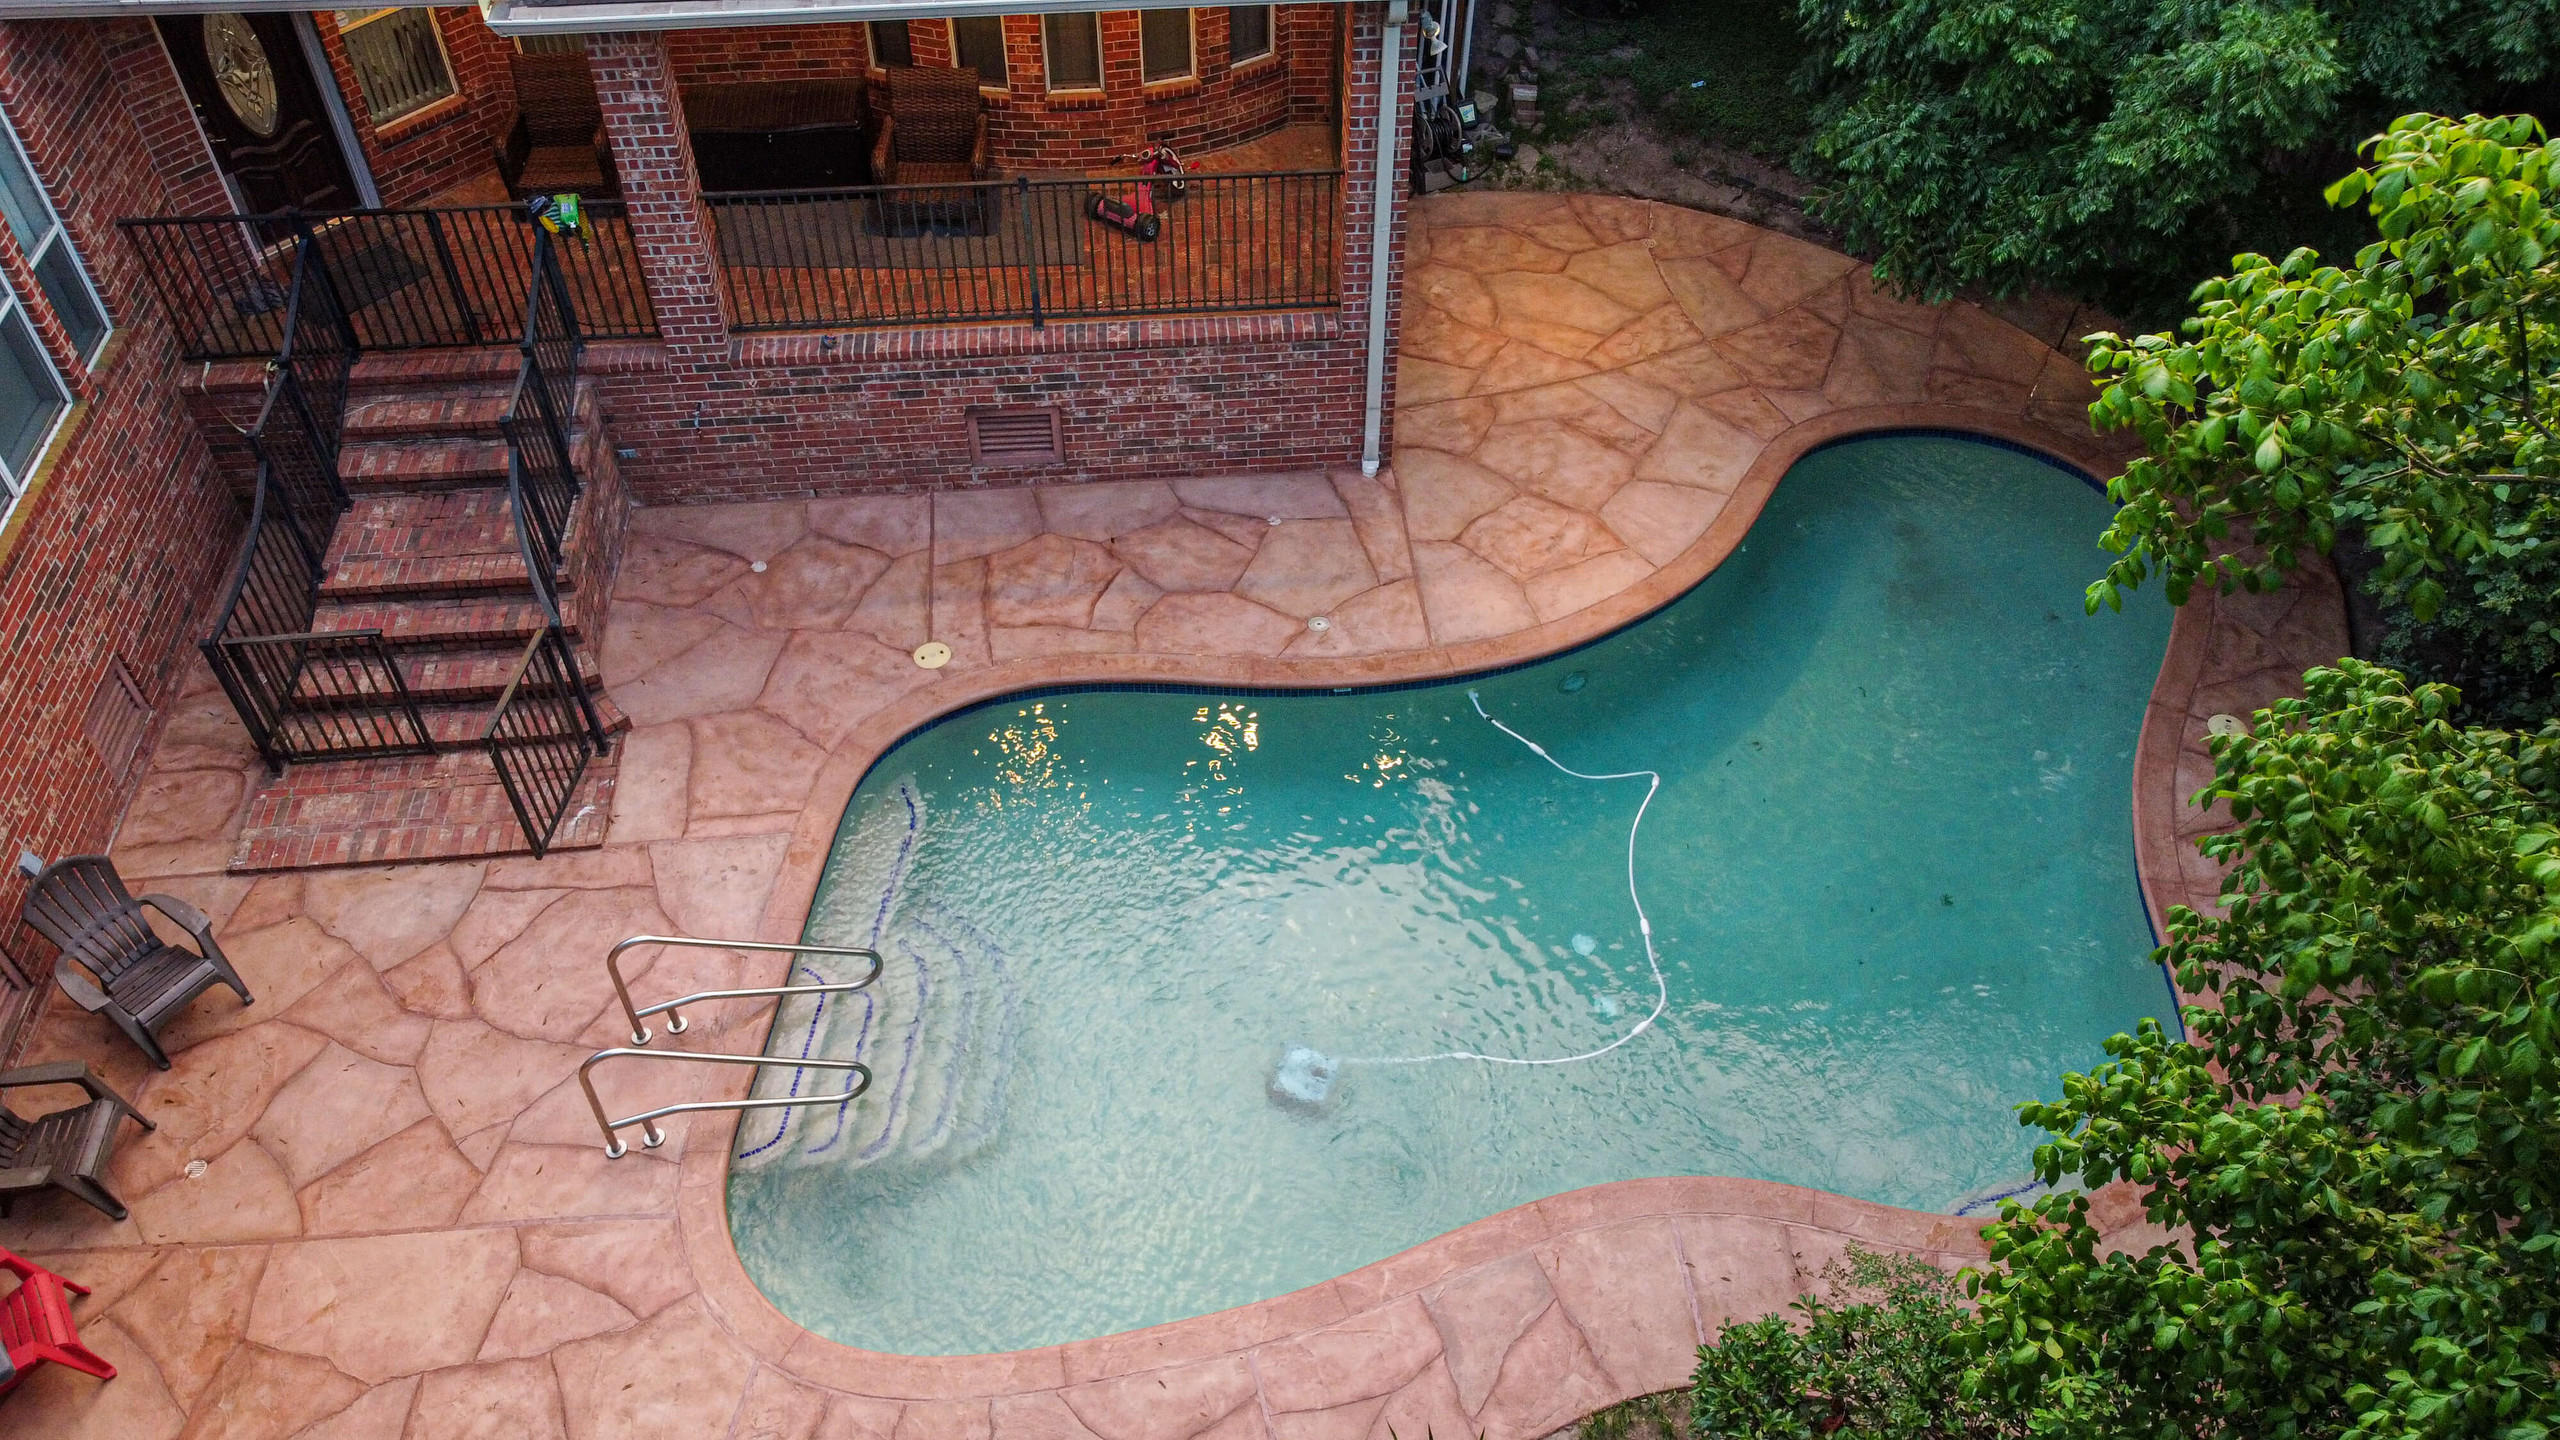 Carvestone pool decks in Houston Texas no tear-out needed hardscape design